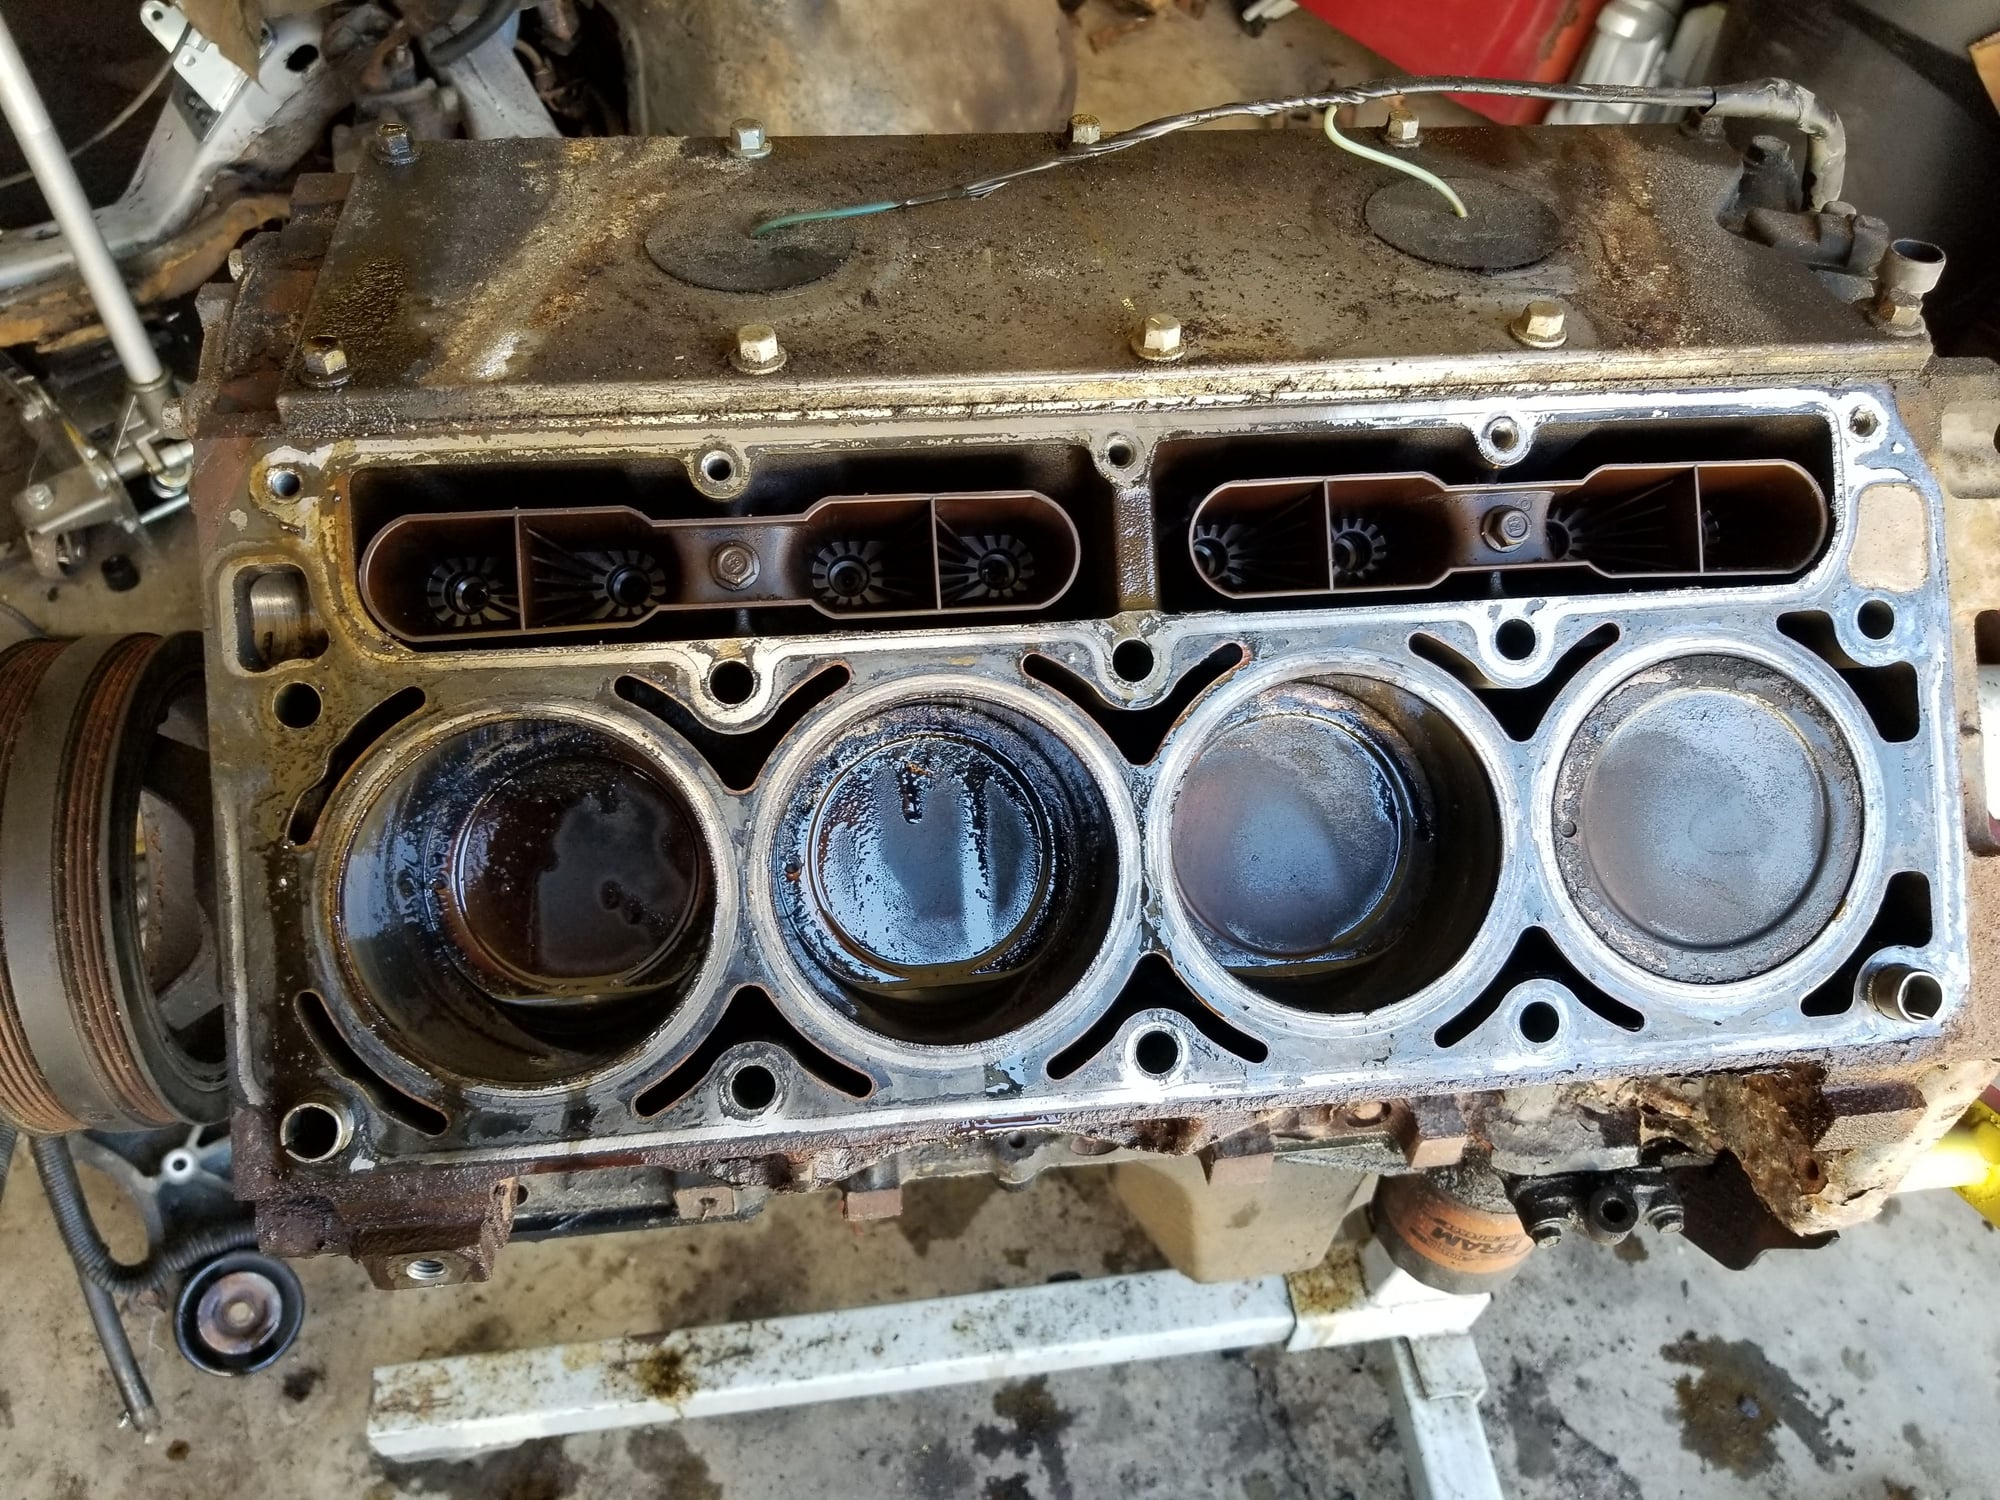  - Misc Engine parts. - Salem, OH 44460, United States